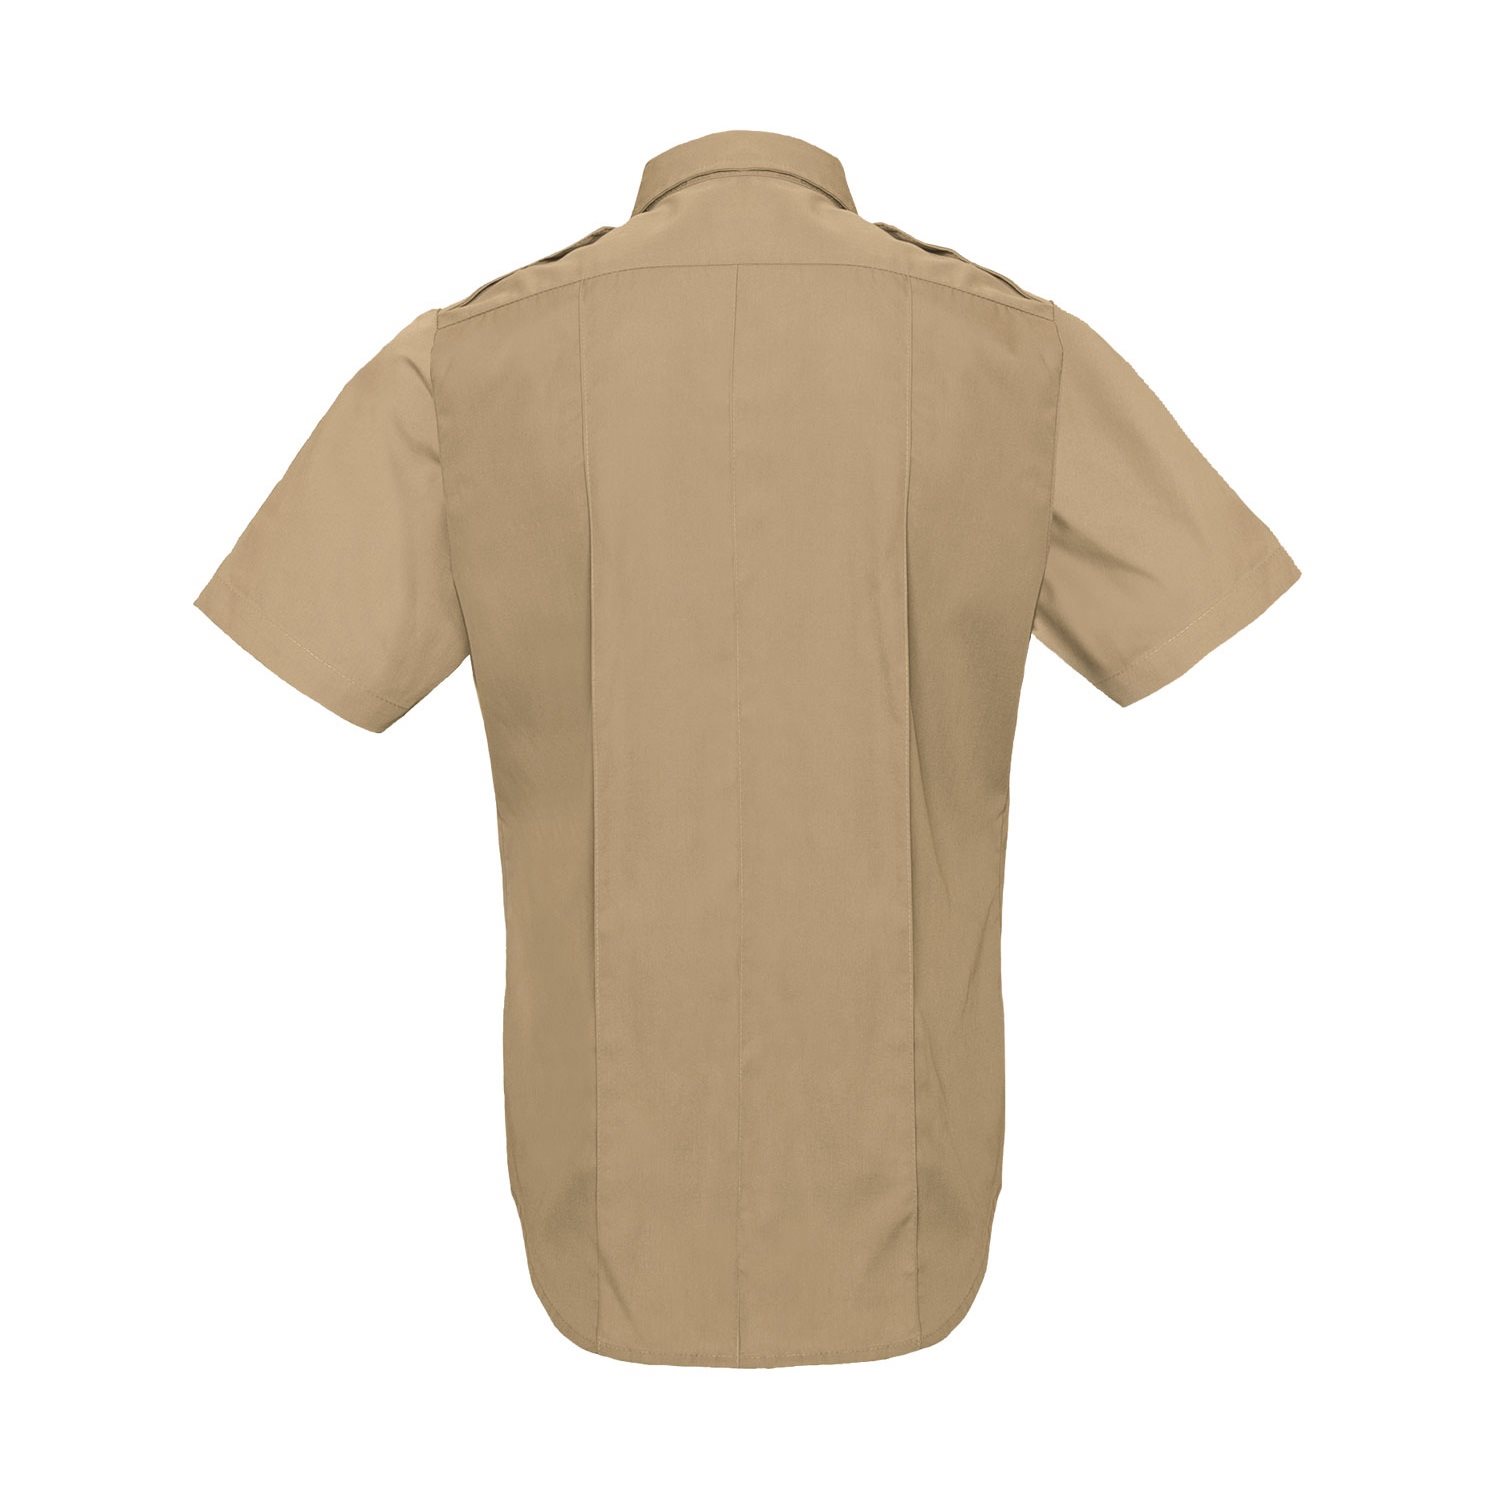 Rothco 30020 Men's Navy Blue Short Sleeve Uniform Shirt 